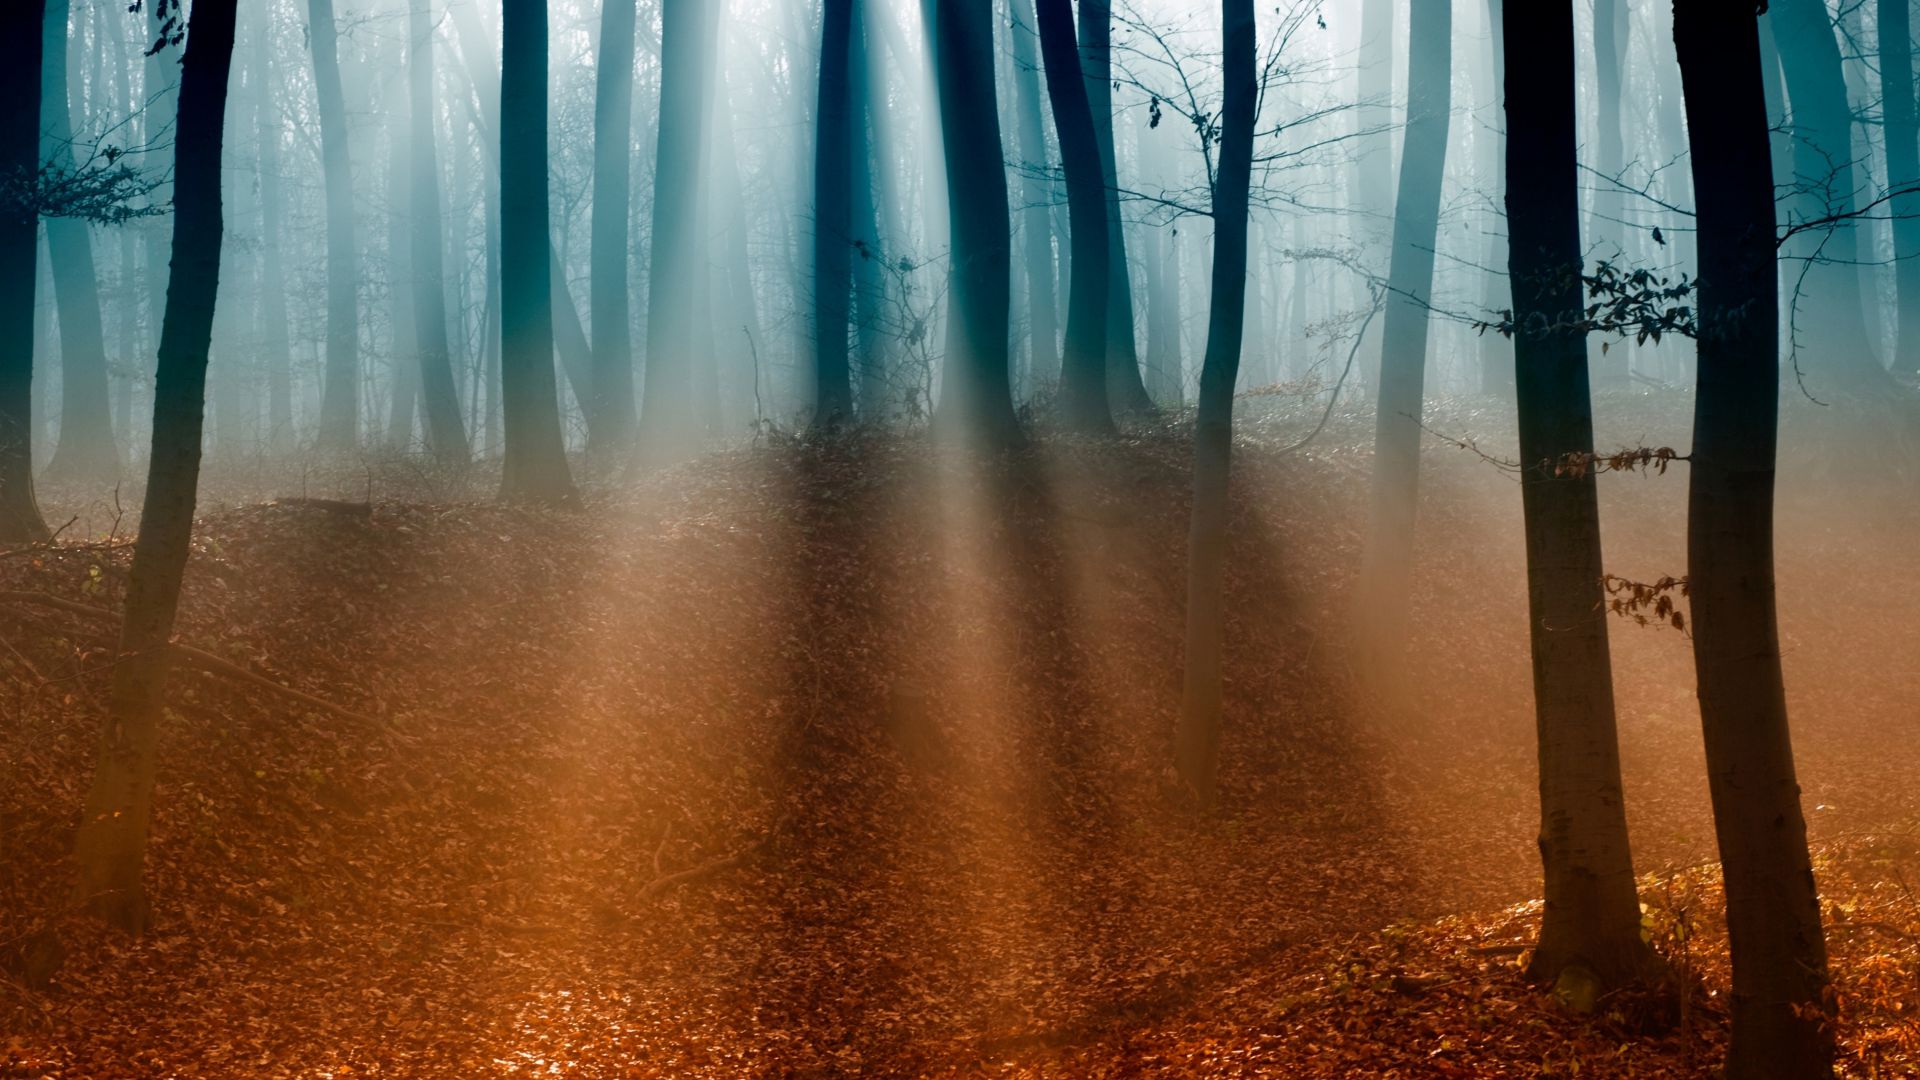 Лес, 4k, 5k, деревья, солнечный свет, туман, осень, Forest, 4k, 5k wallpaper, trees, sunlight, fog, autumn (horizontal)